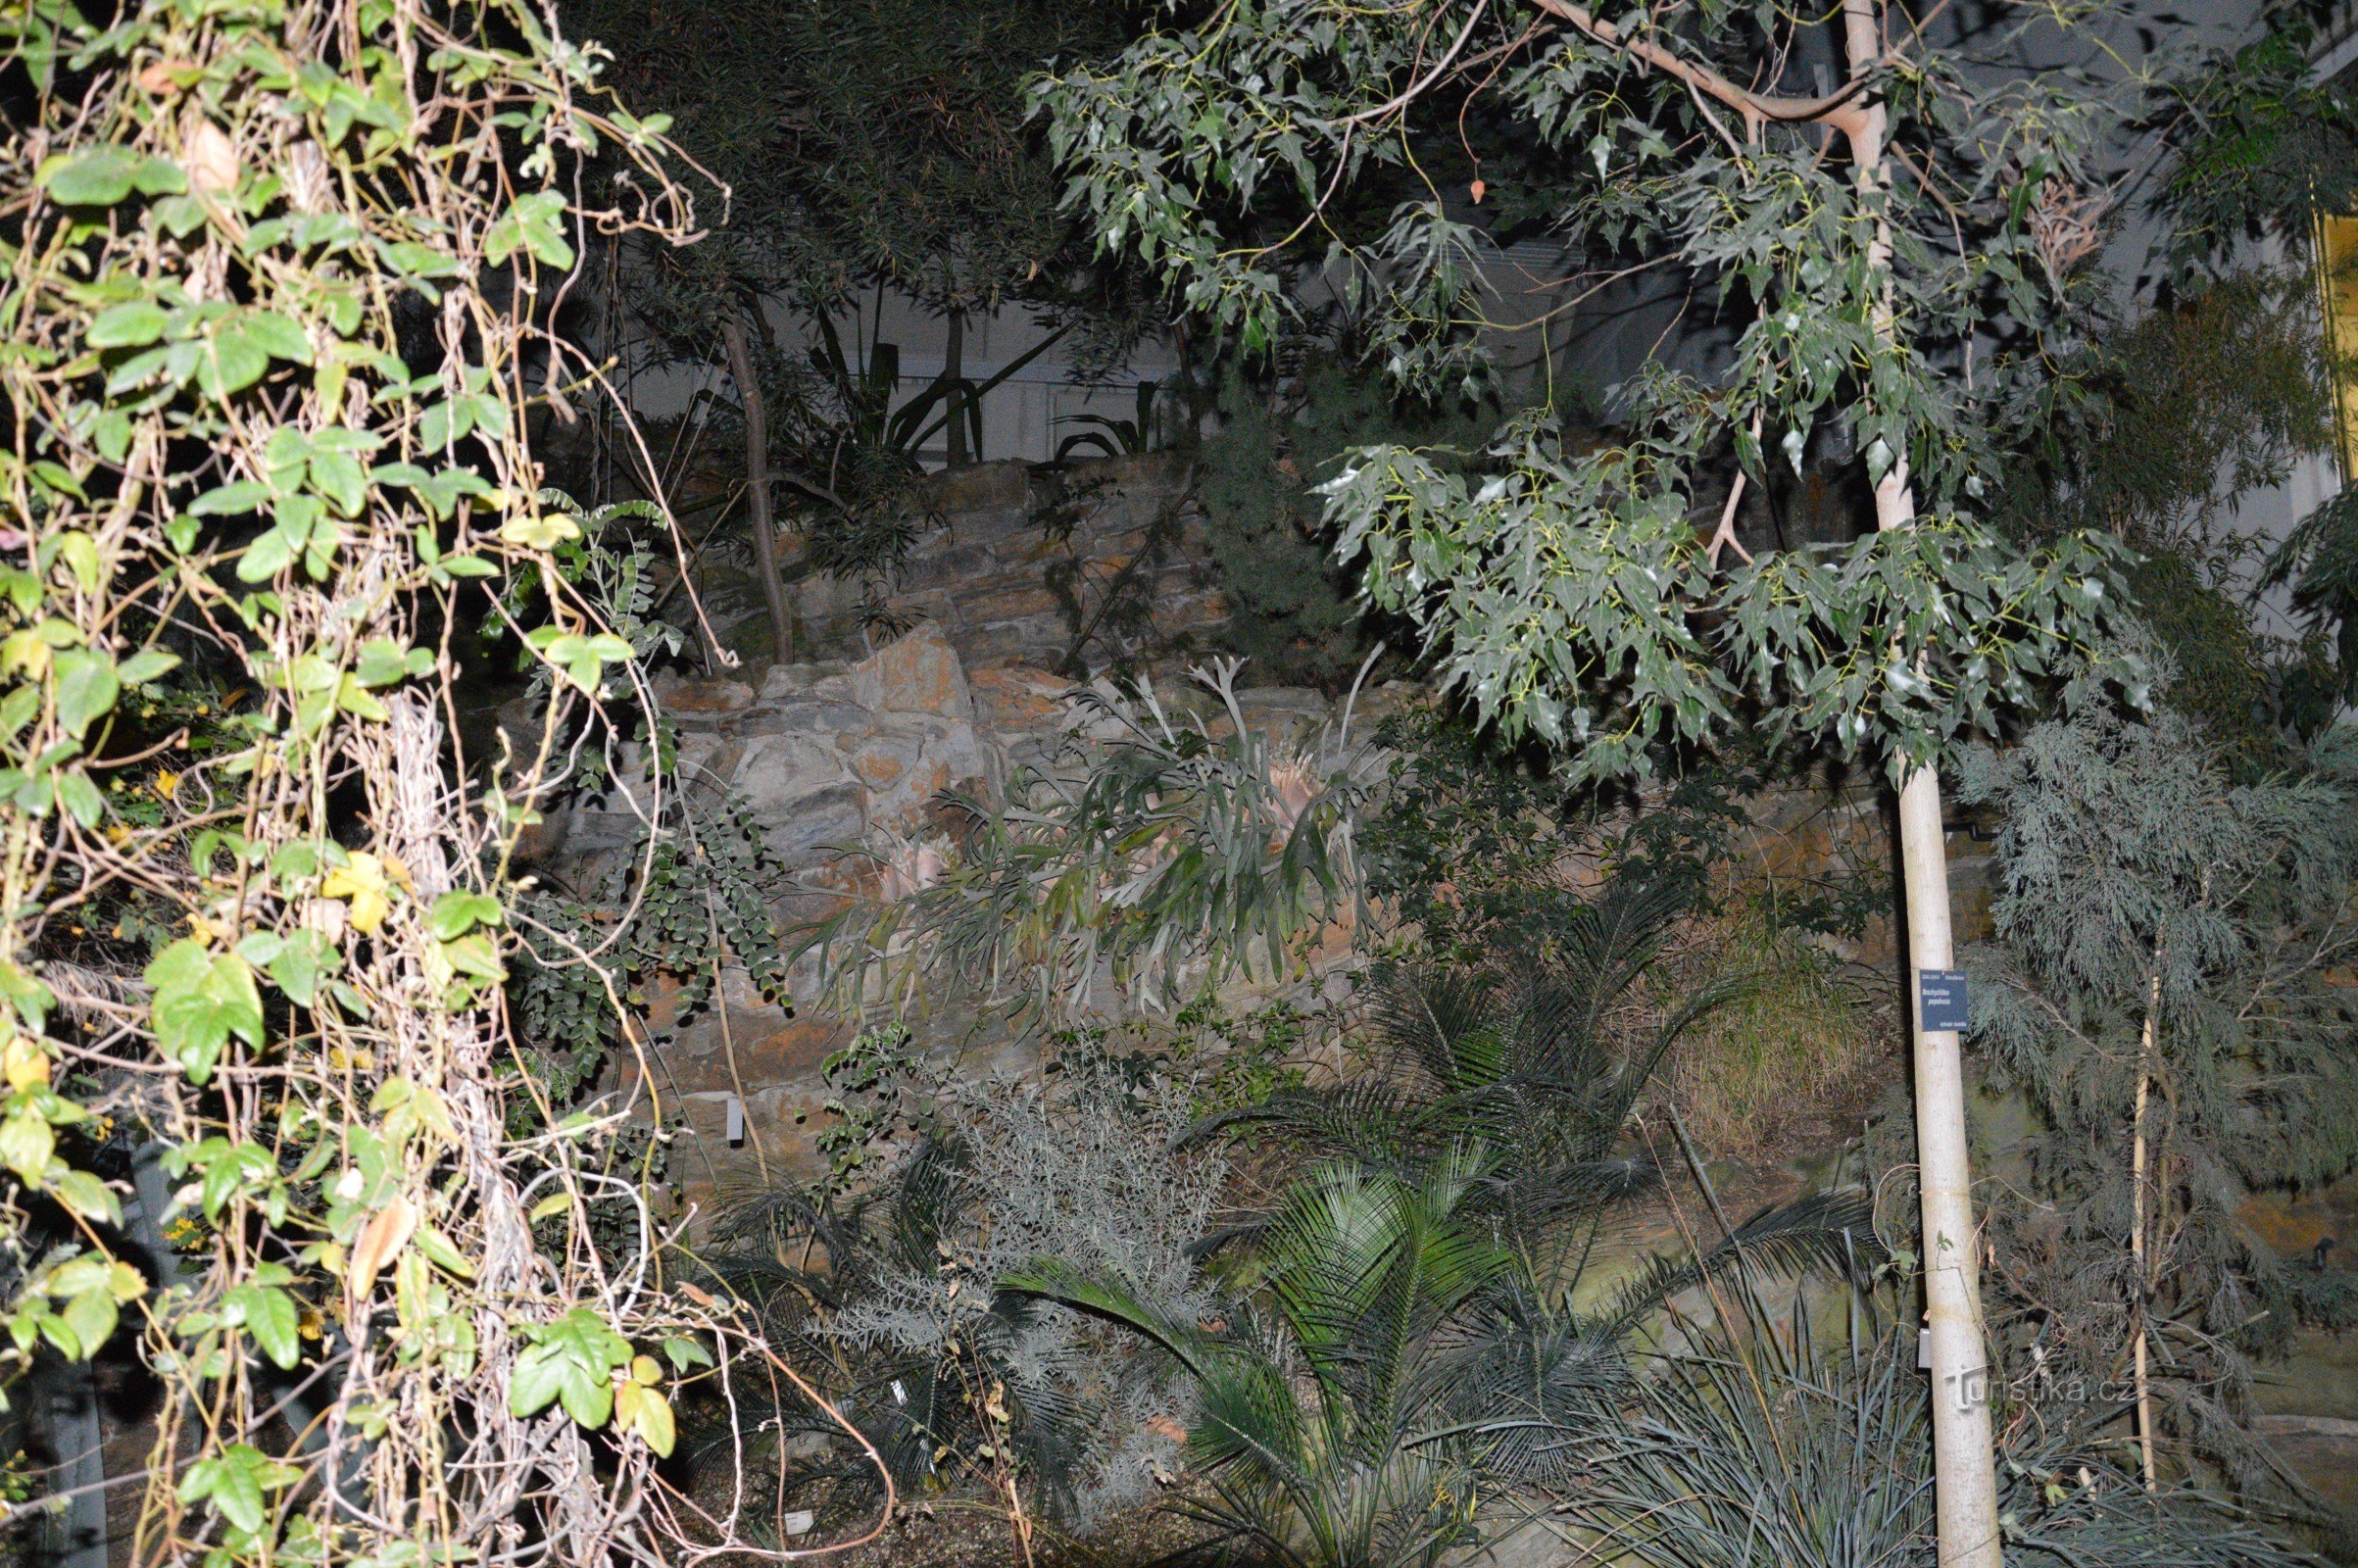 Botanic garden greenhouse Fata morgana at night